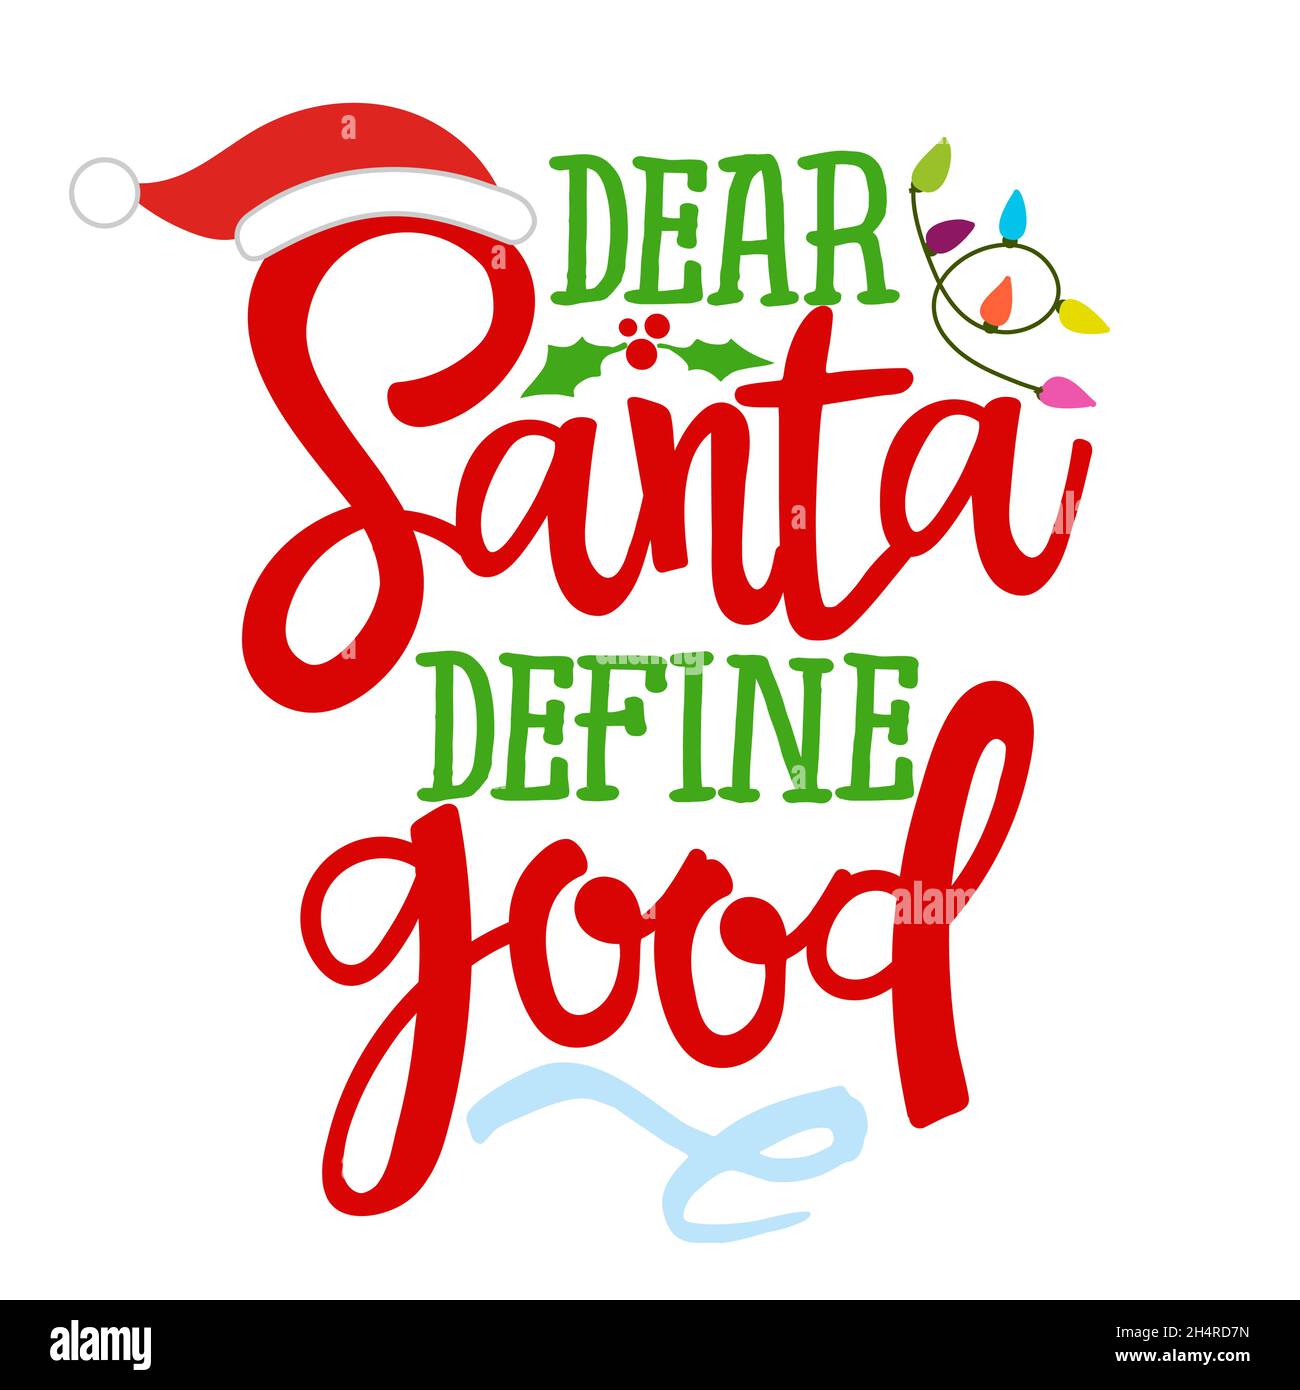 https://c8.alamy.com/comp/2H4RD7N/dear-santa-define-good-calligraphy-phrase-for-christmas-hand-drawn-lettering-for-xmas-greetings-cards-invitations-good-for-t-shirt-mug-gift-p-2H4RD7N.jpg